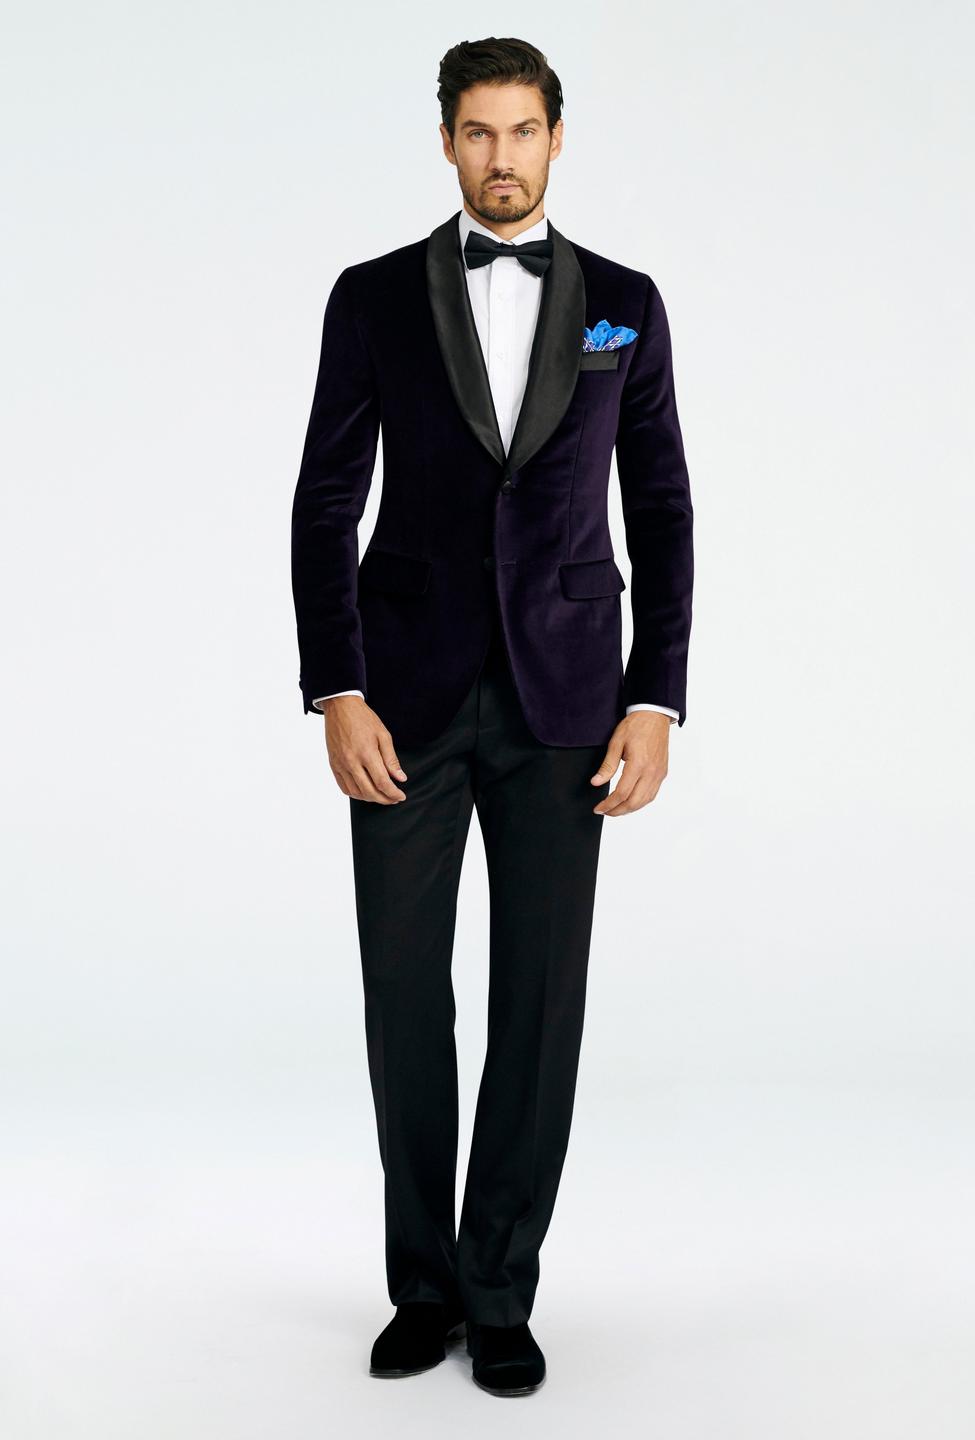 Purple blazer - Hardford Solid Design from Tuxedo Indochino Collection